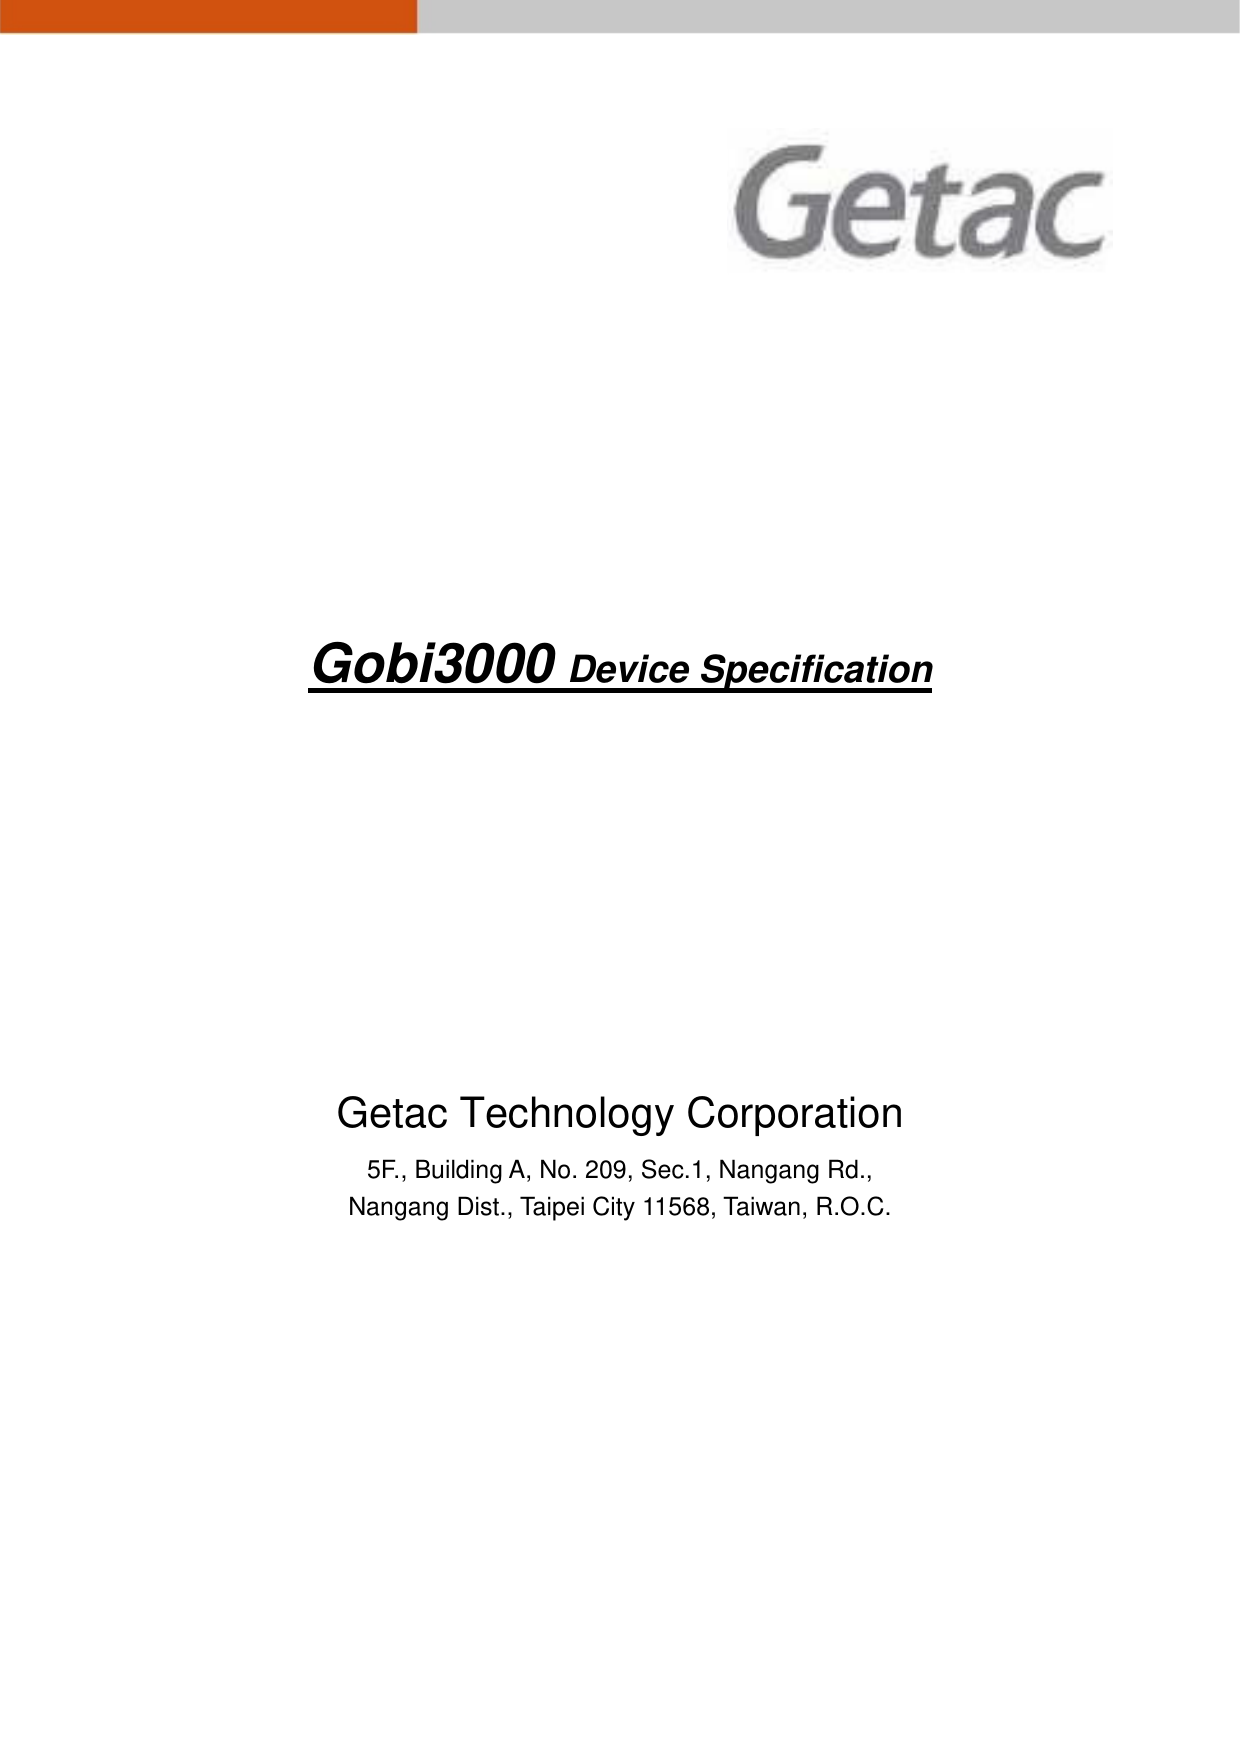           Gobi3000 Device Specification      Getac Technology Corporation 5F., Building A, No. 209, Sec.1, Nangang Rd., Nangang Dist., Taipei City 11568, Taiwan, R.O.C.              